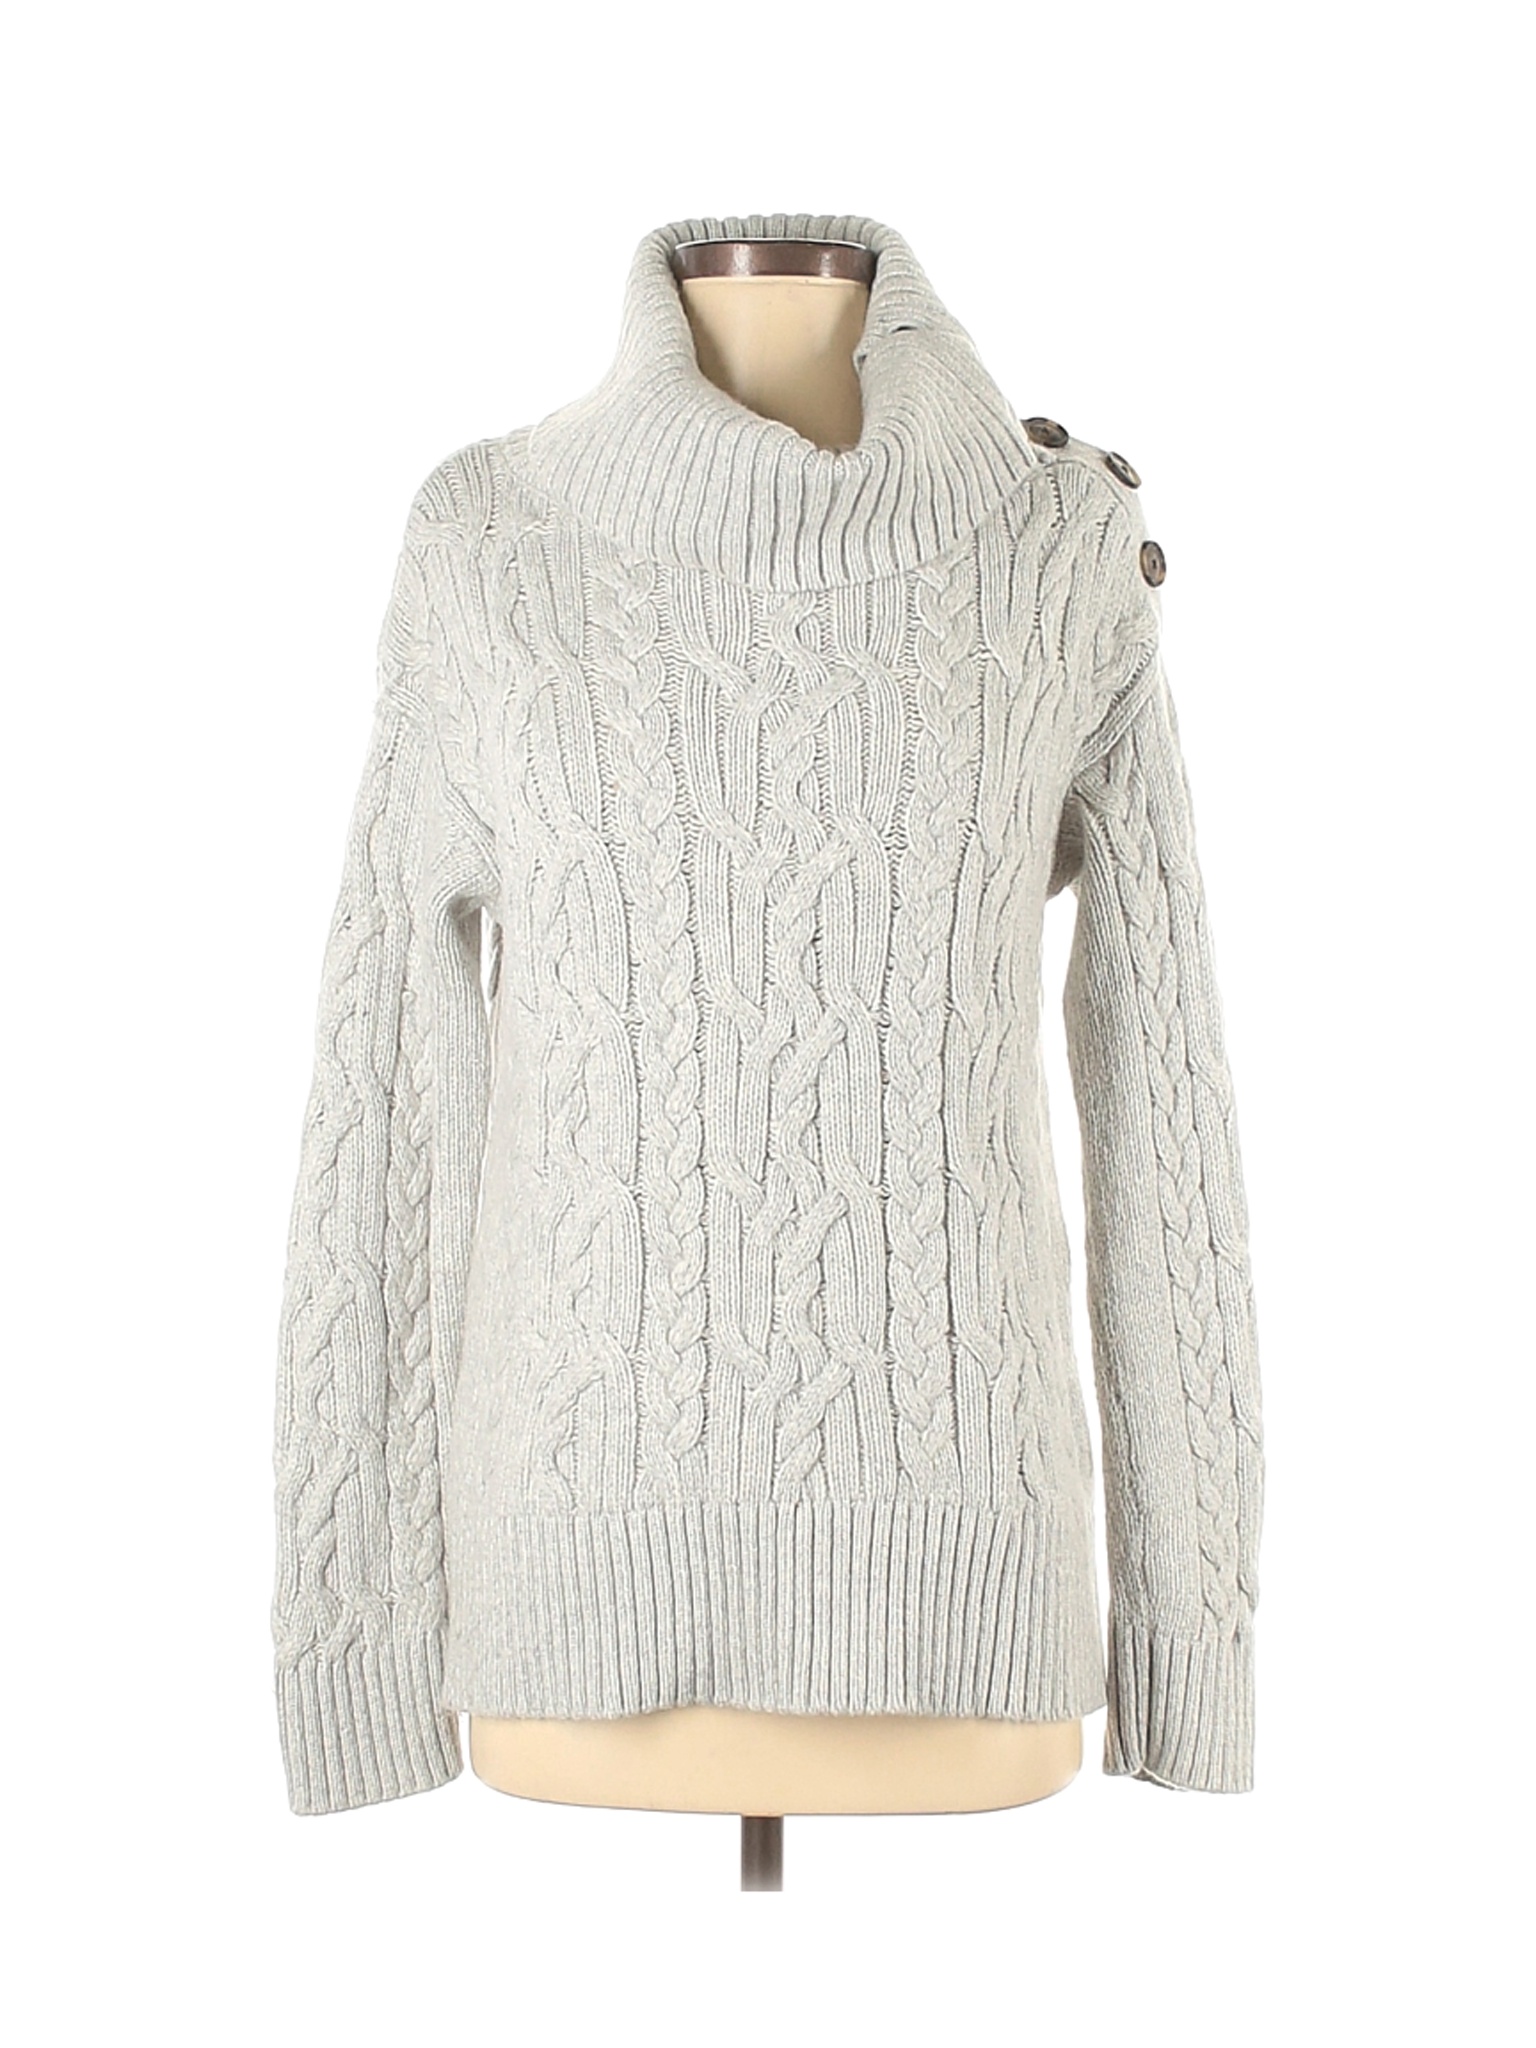 Banana Republic Women Gray Turtleneck Sweater XS | eBay